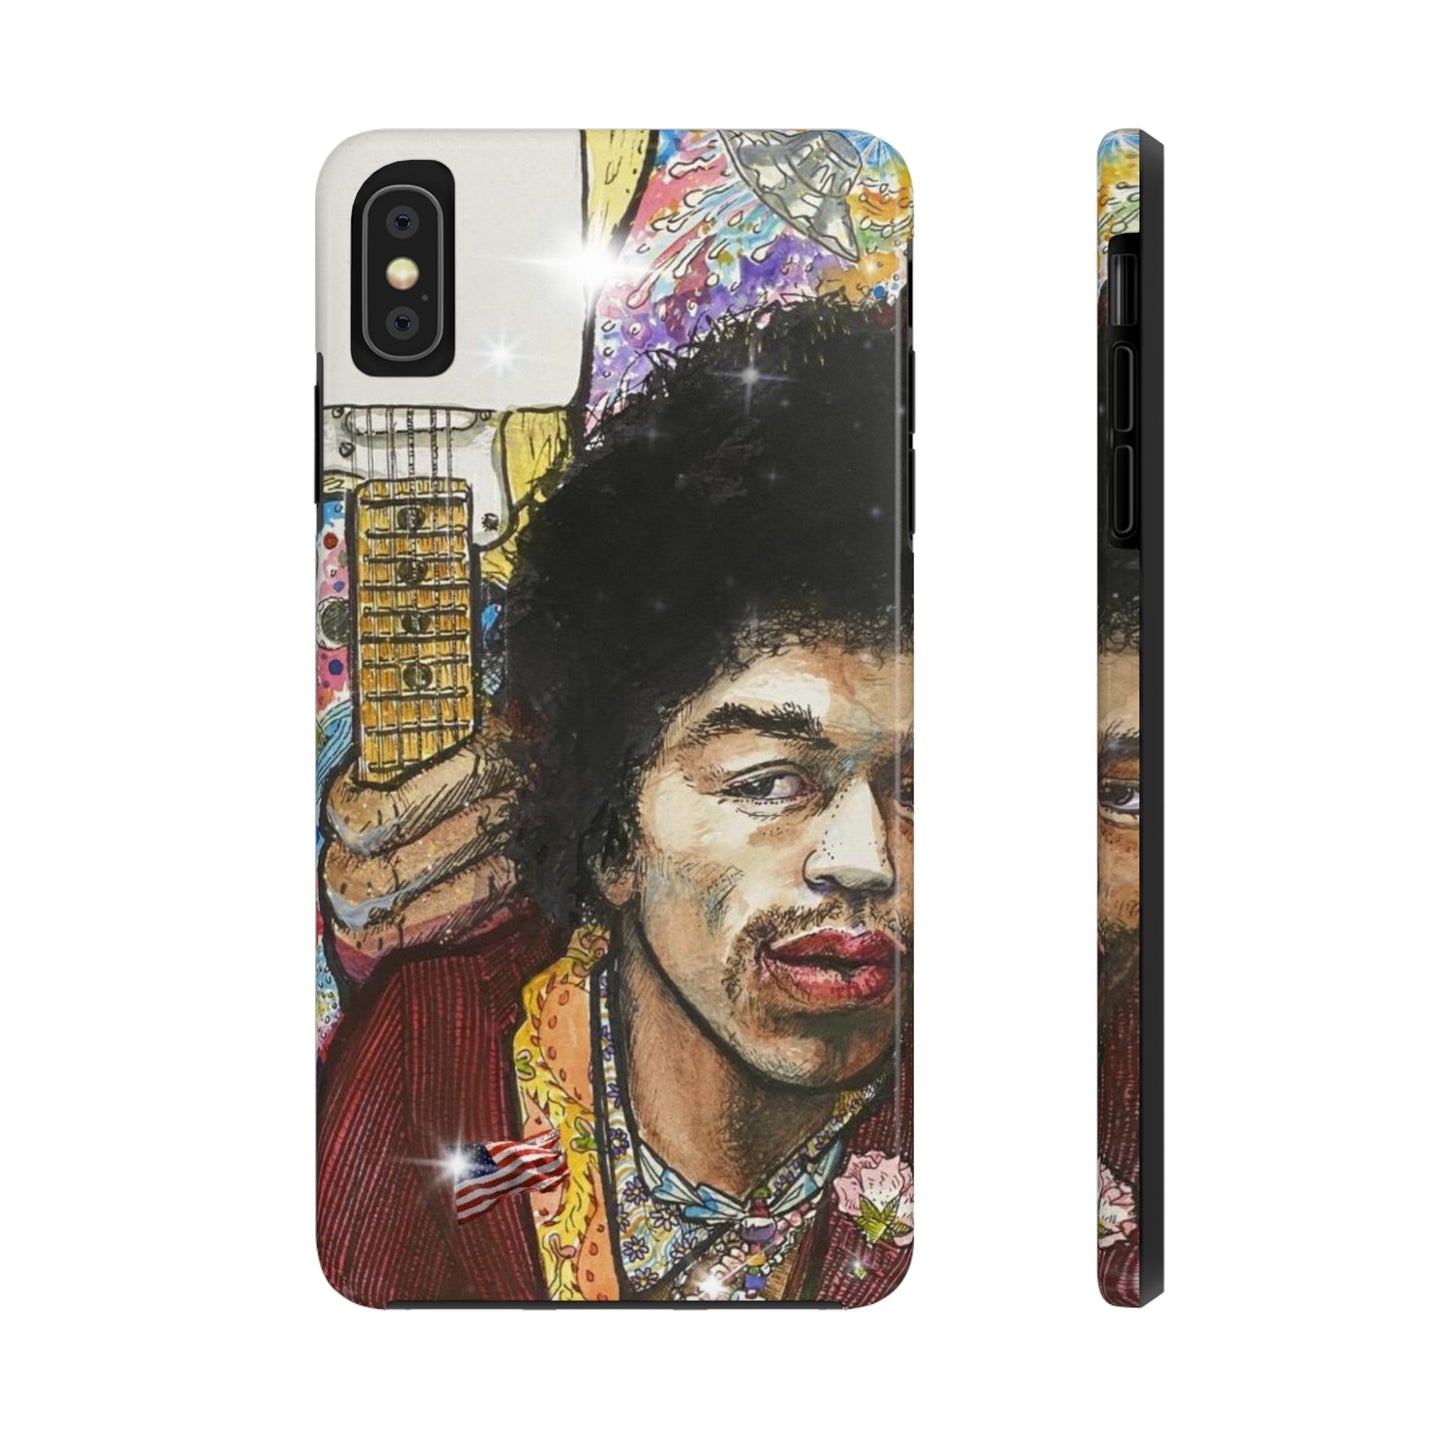 Case Mate Tough Phone Cases Featuring Jimi Hendrix Fan art by #ShallyBrady